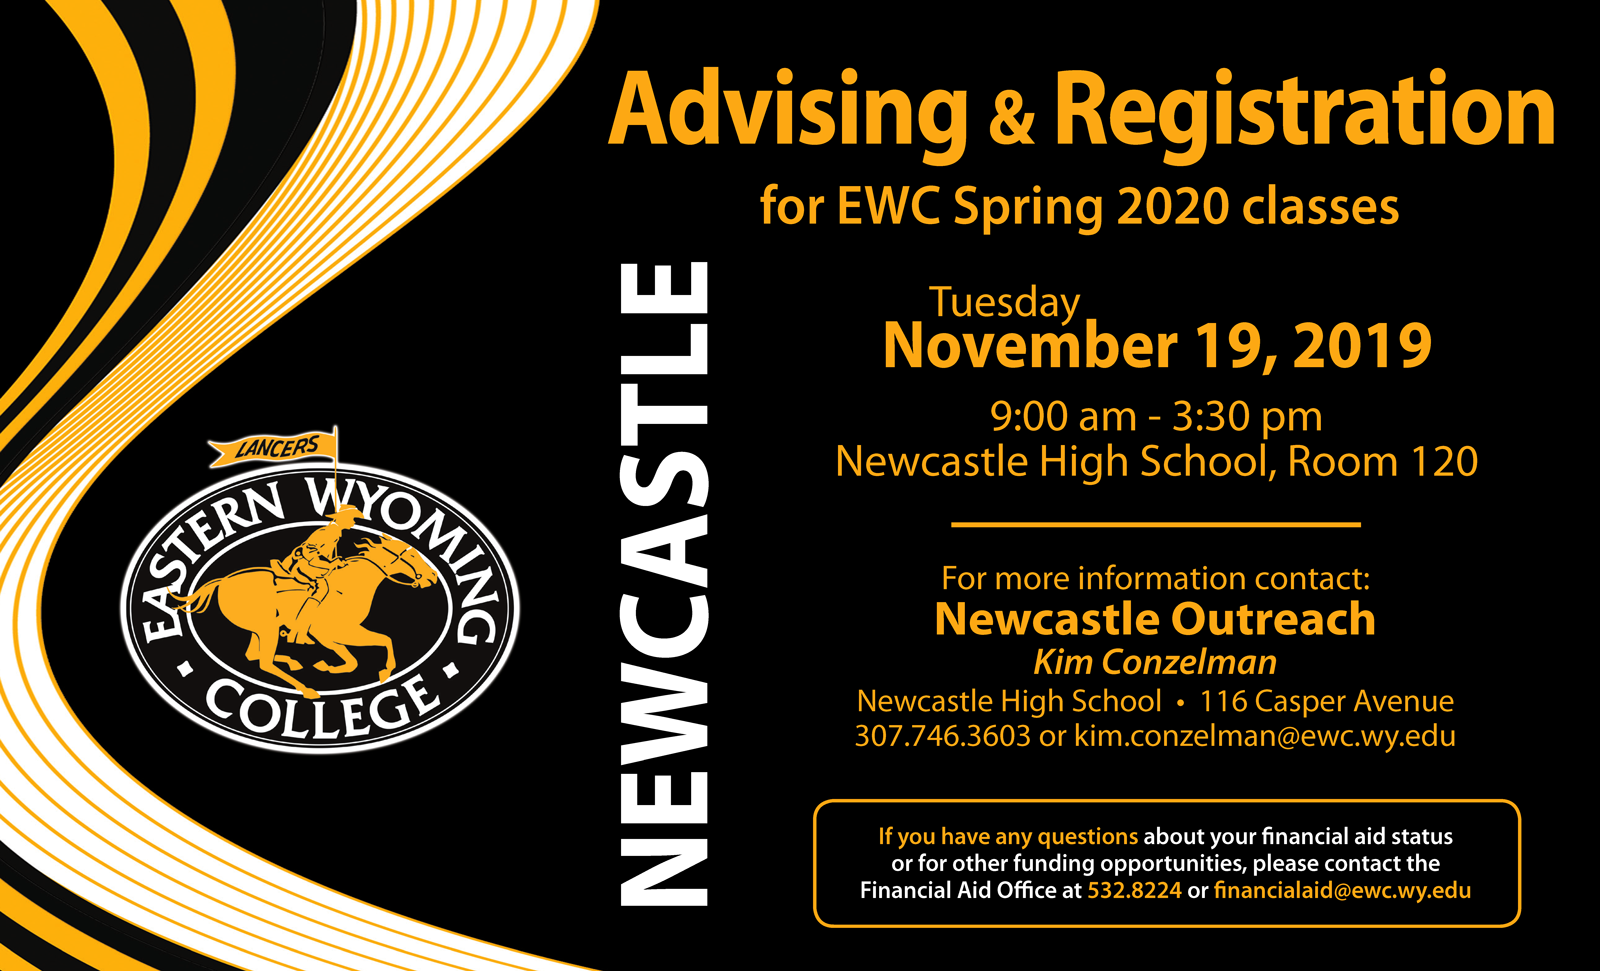 Newcastle Outreach Advising & Registration for Spring 2020